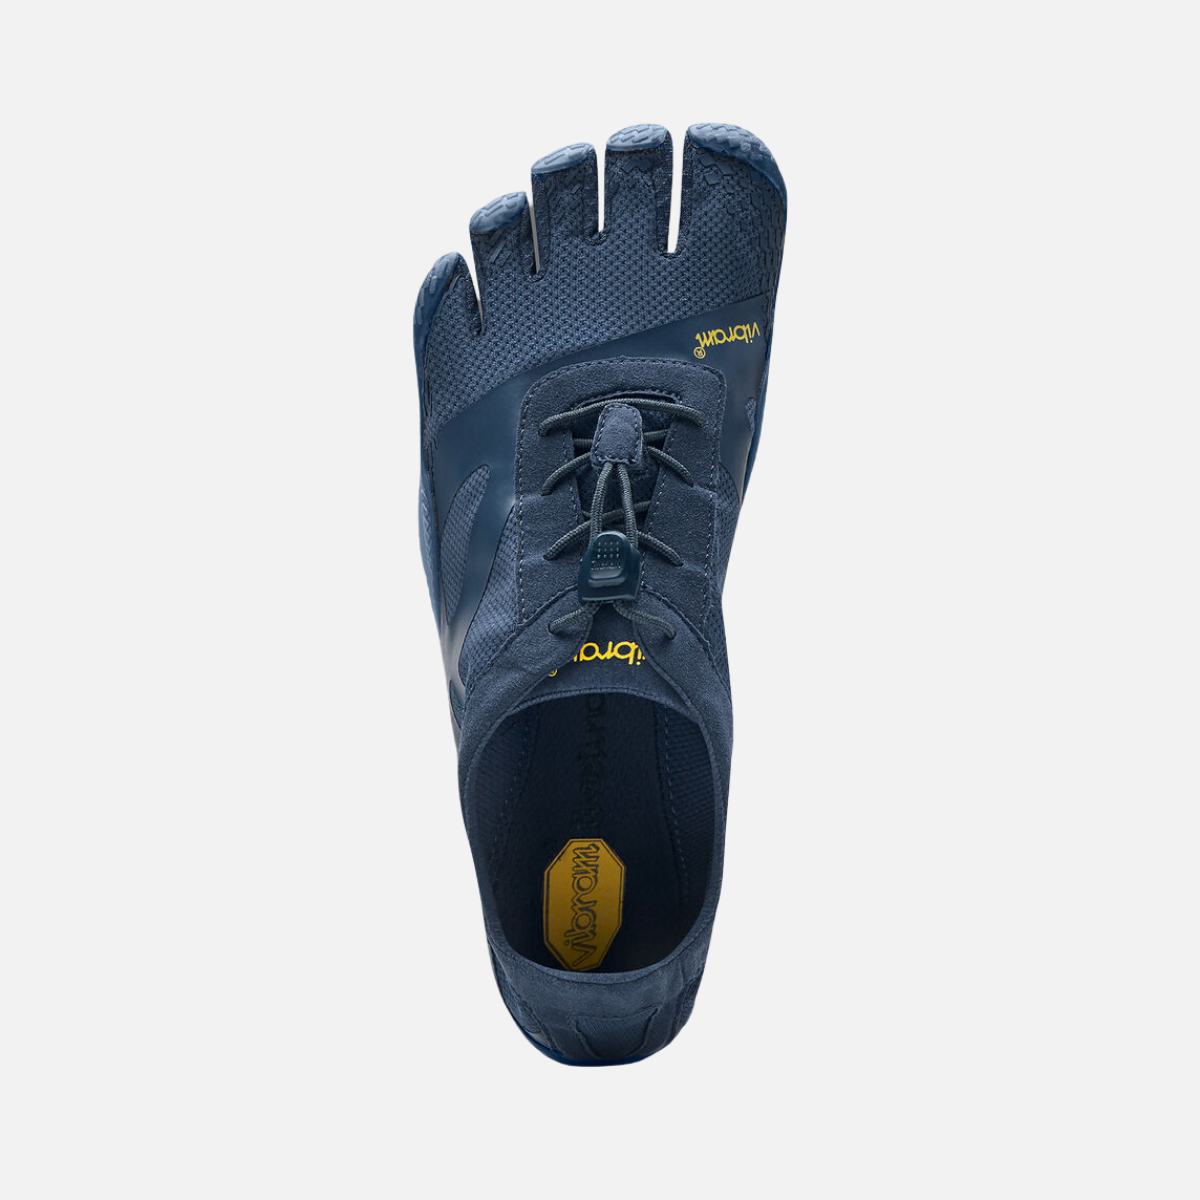 Vibram Kso Evo Mens Barefoot Training Footwear - Blue